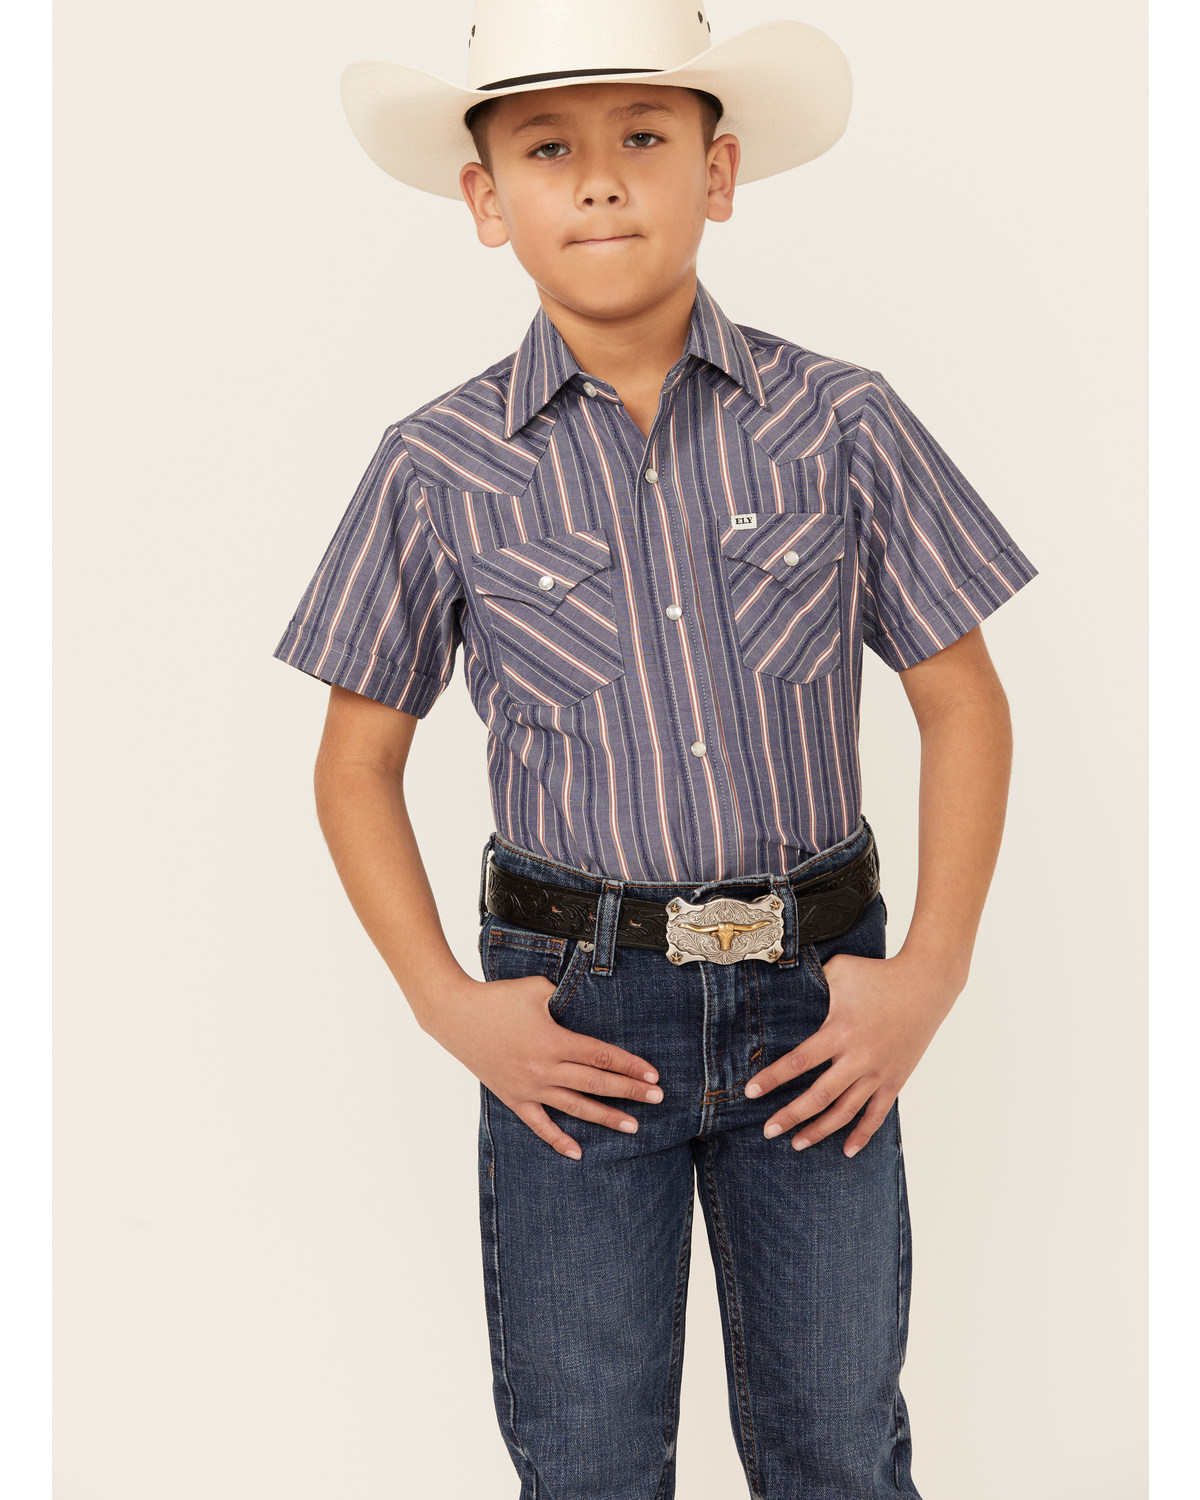 Ely Walker Boys' Dobby Striped Short Sleeve Pearl Snap Western Shirt